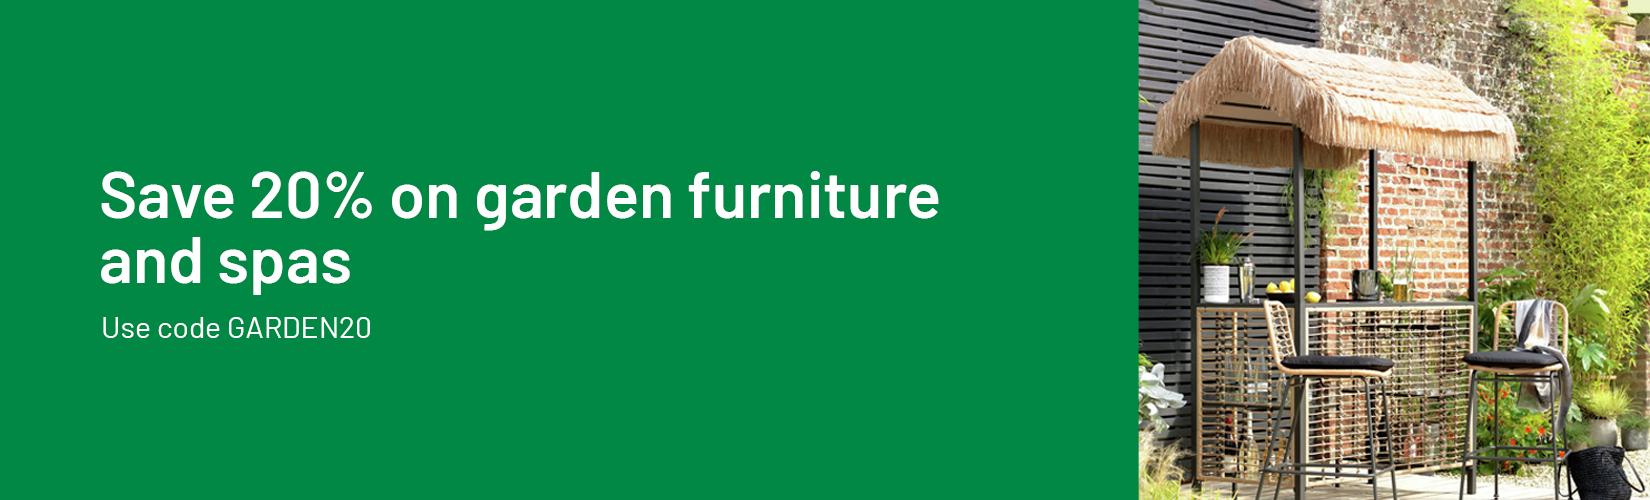 Save 20% on garden furniture and spas. Use code GARDEN20.